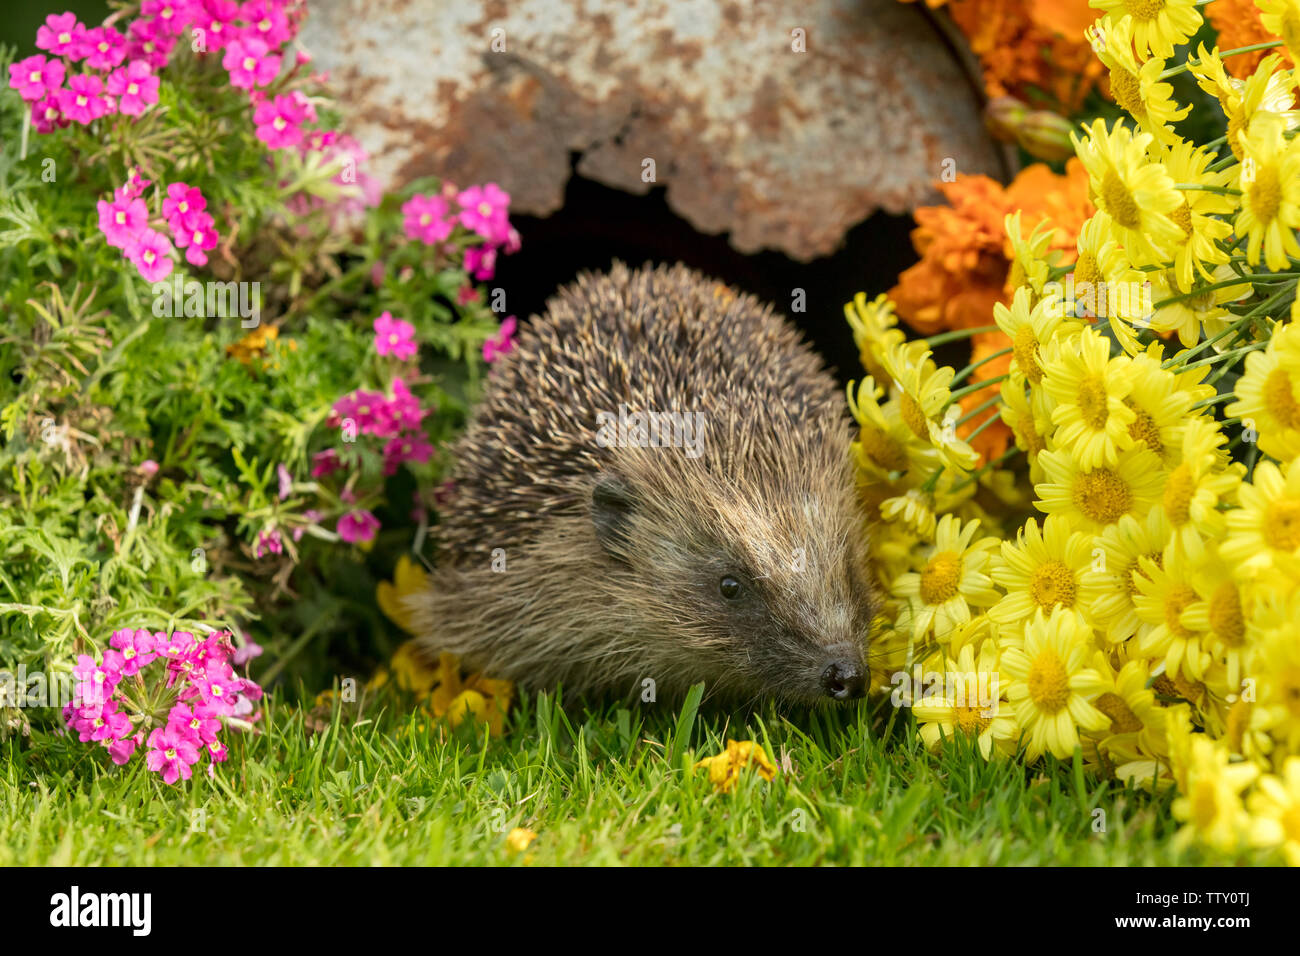 Hedgehog, (Scientific name: Erinaceus Europaeus) wild, native, European hedgehog in natural garden habitat with colourful summer flowers.  Horizontal Stock Photo